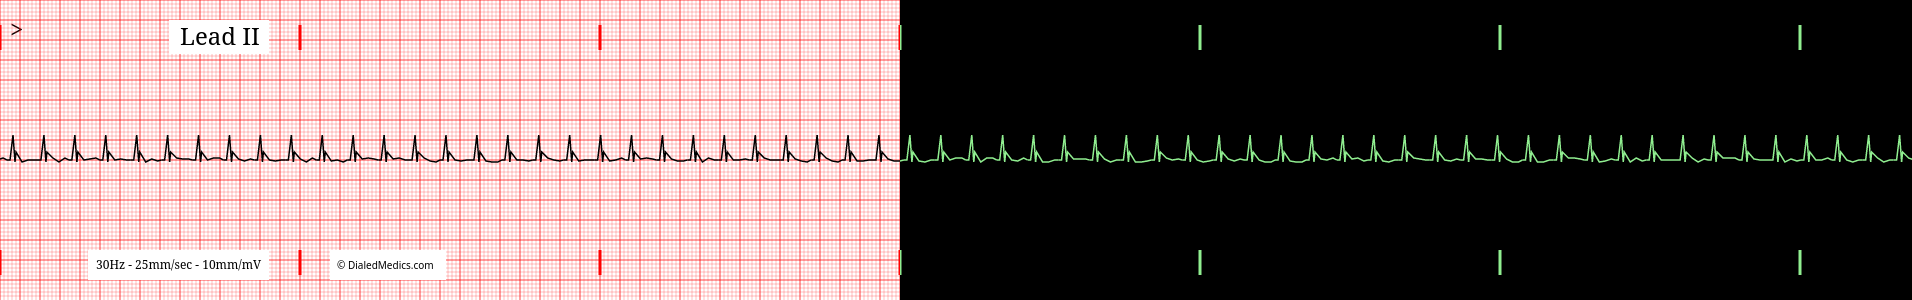 Example Supraventricular Tachycardia EKG.